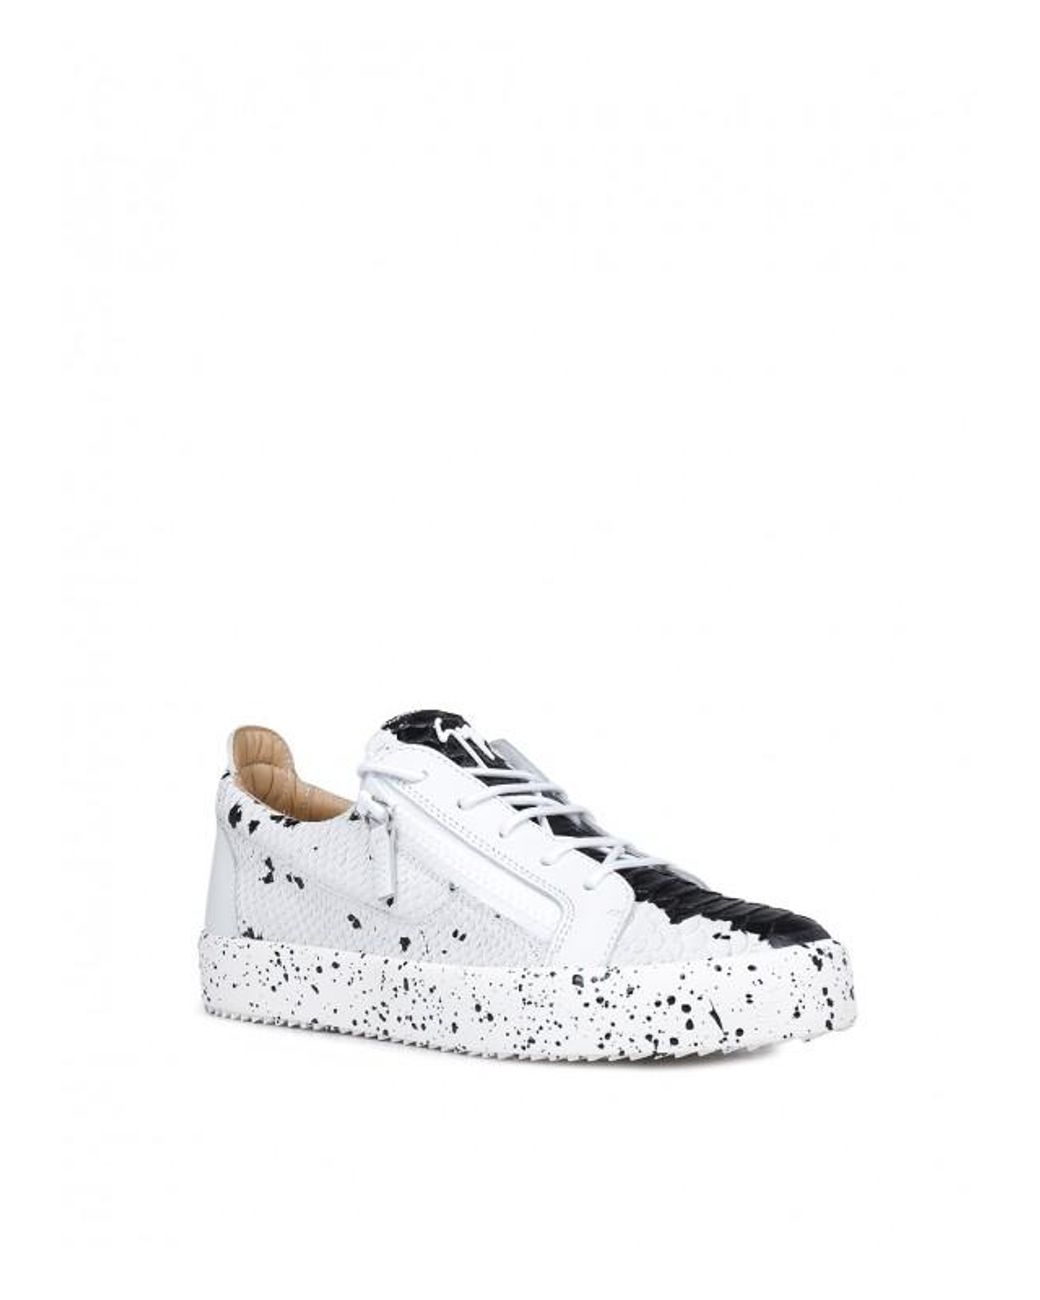 Giuseppe Zanotti Leather White And Black Croc Frankie Sneakers 